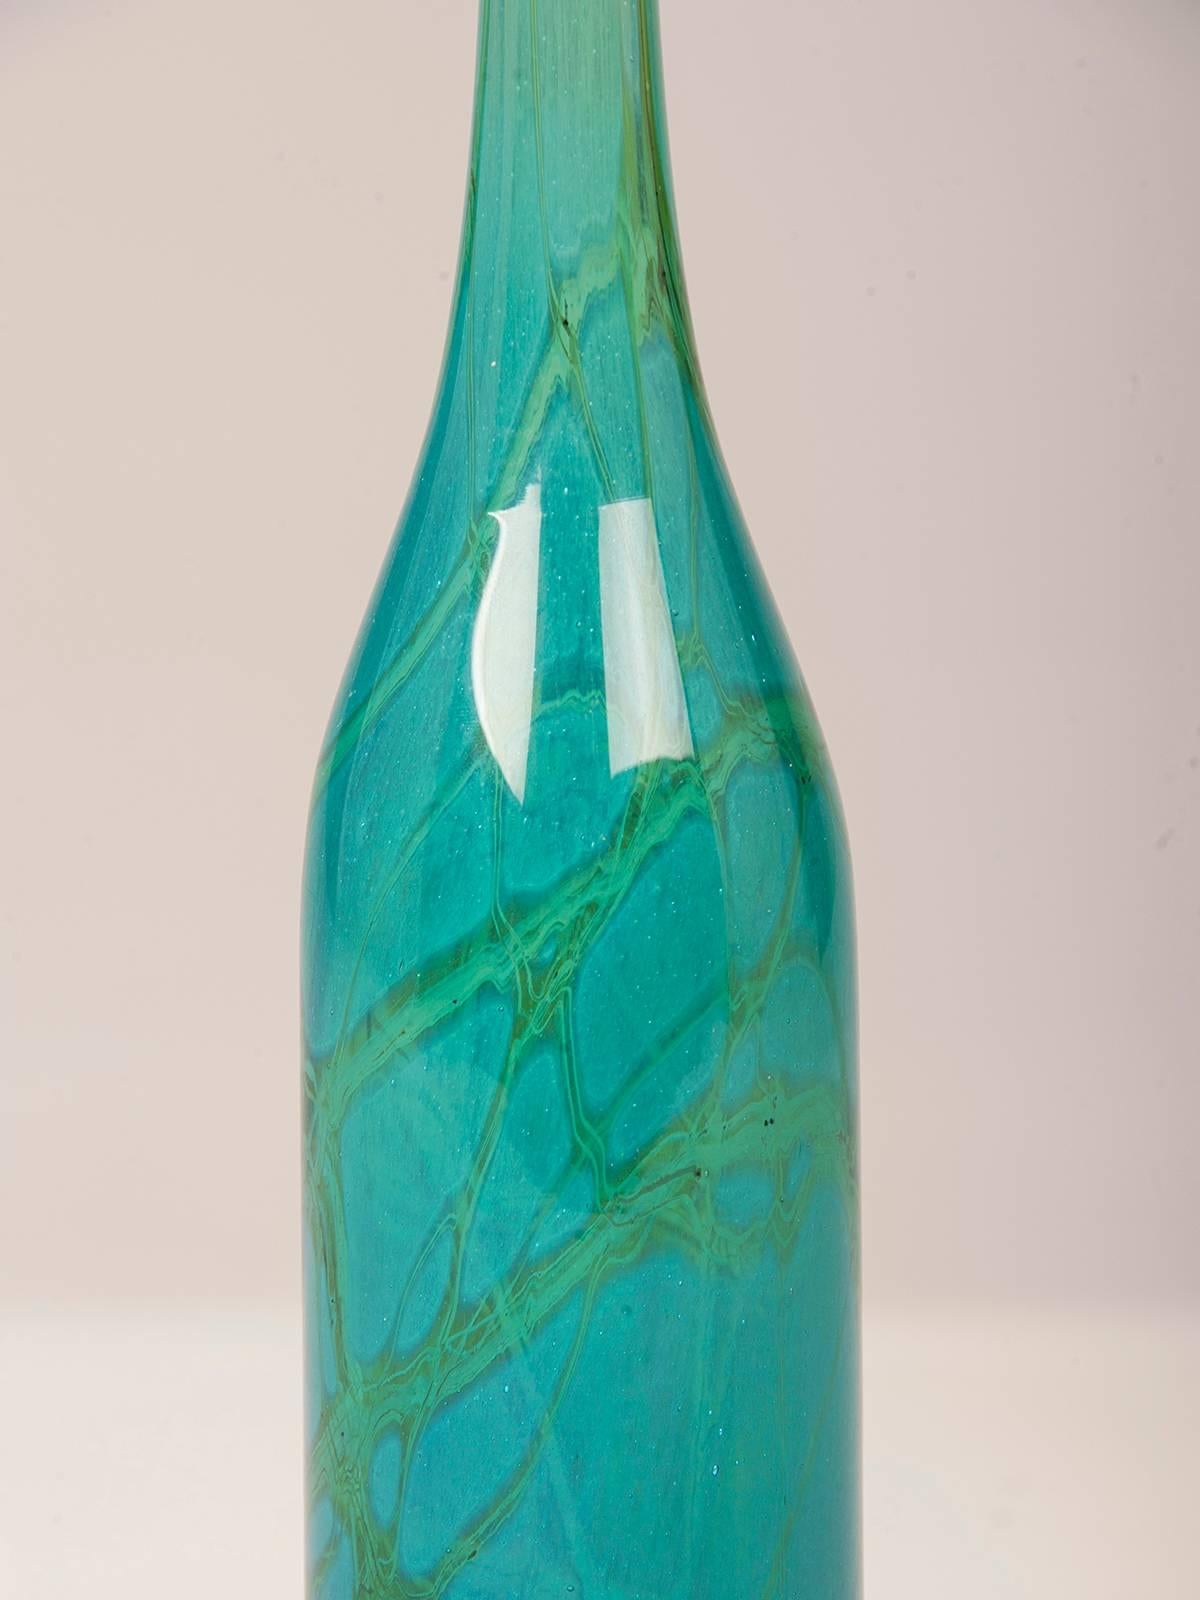 Vintage Maltese Mdina Handblown Glass Bottle from Malta, circa 1975 1